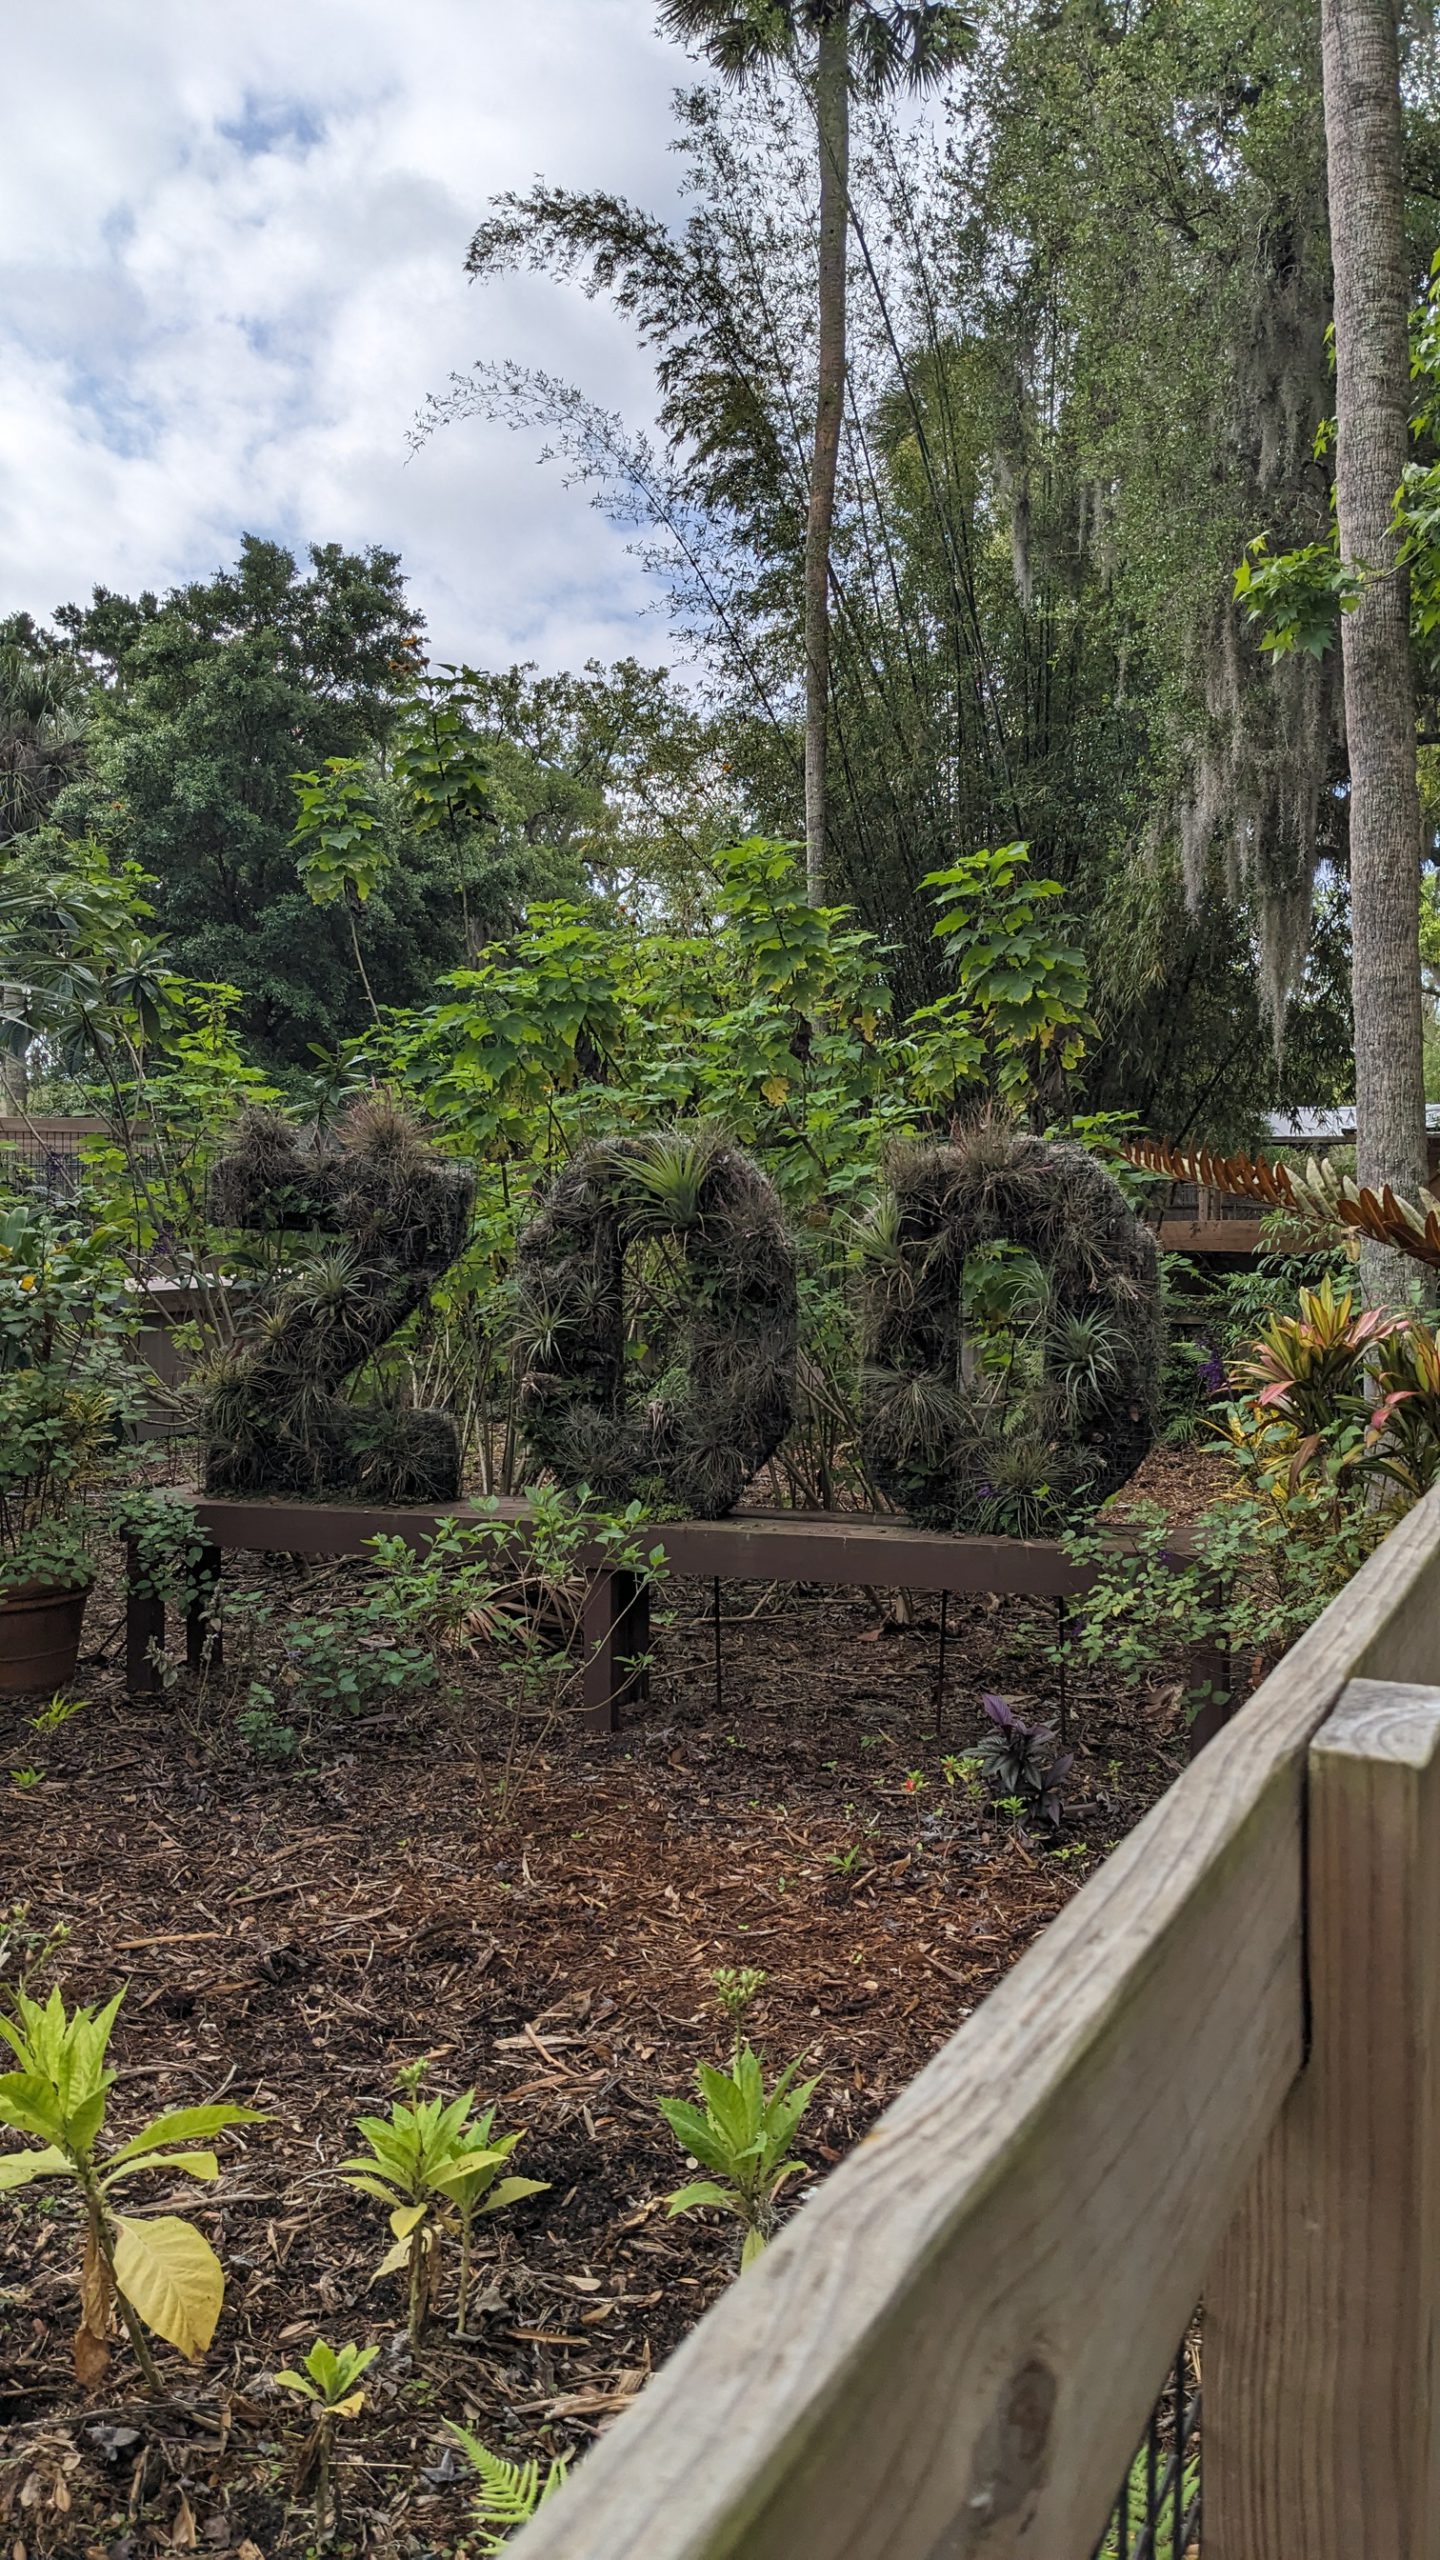 A Visit to Central Florida Zoo & Botanical Gardens